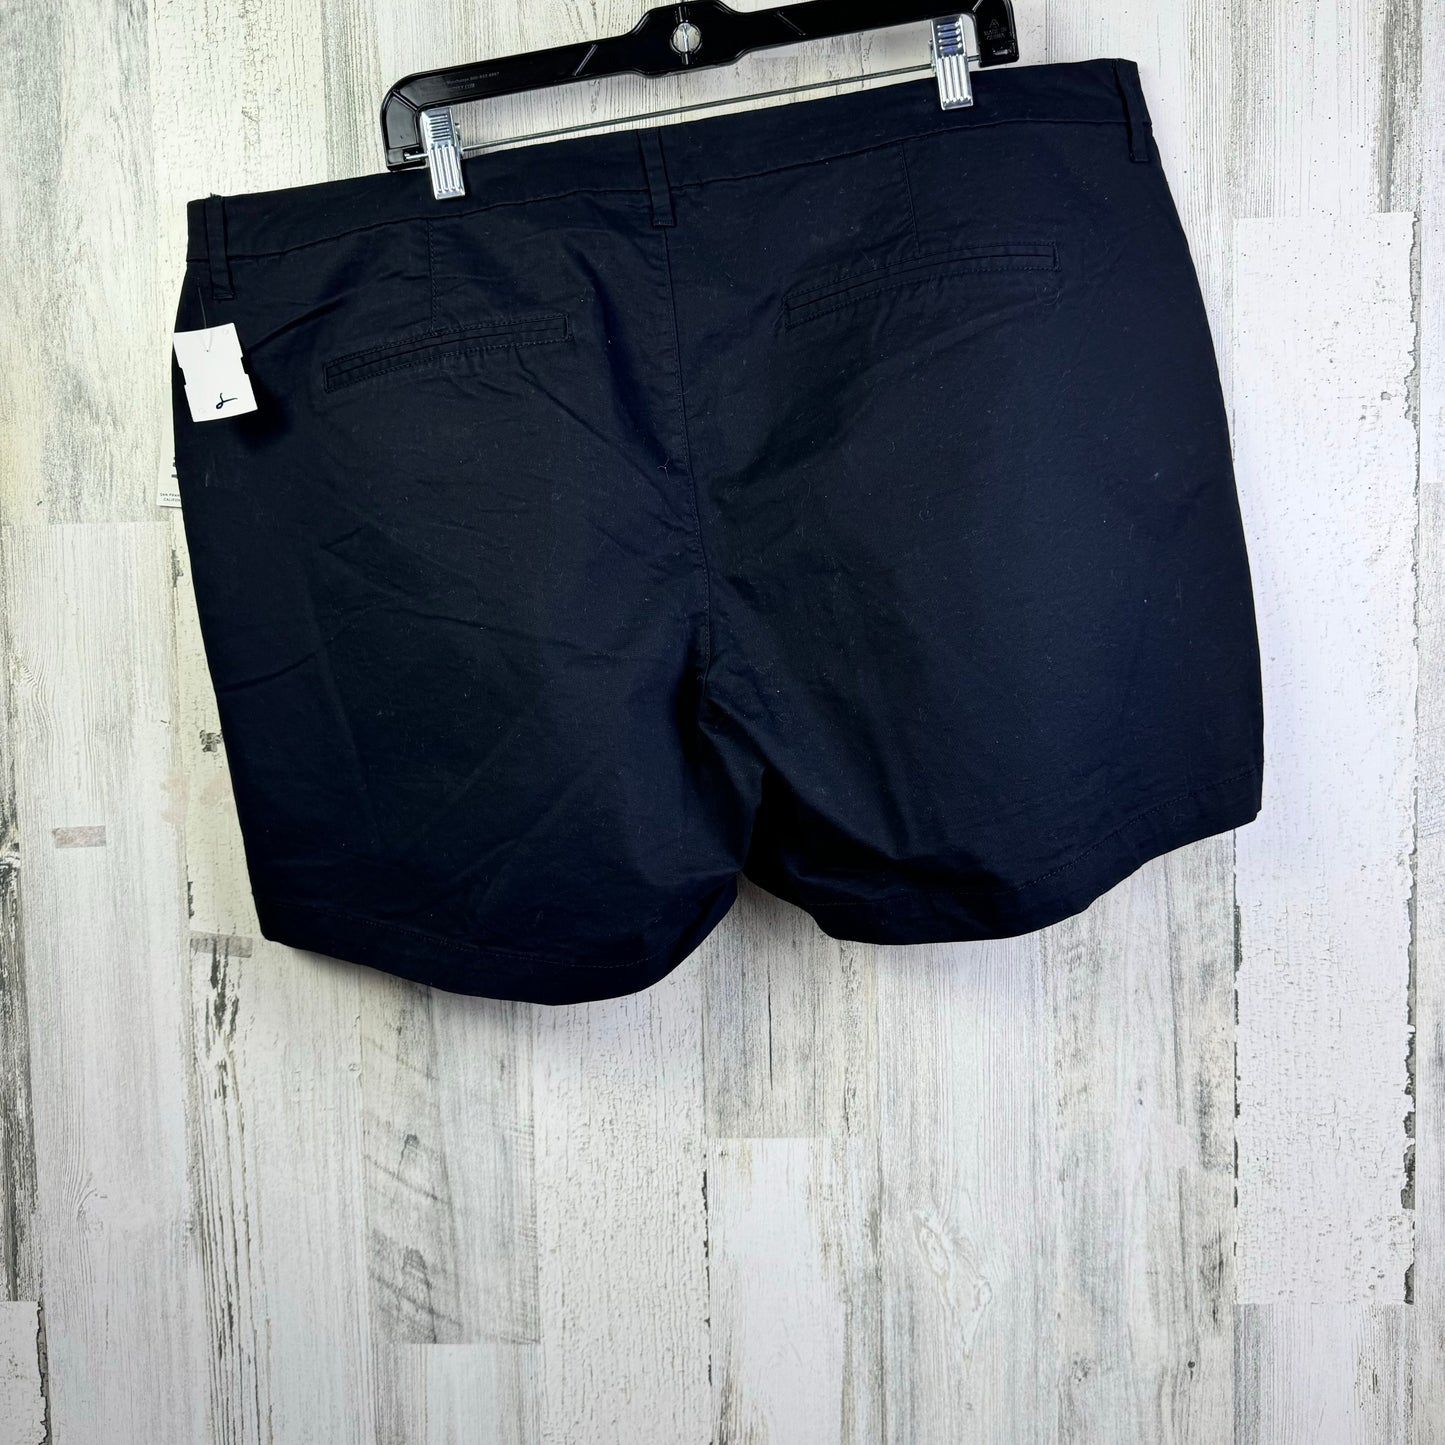 Black Shorts Old Navy, Size 20